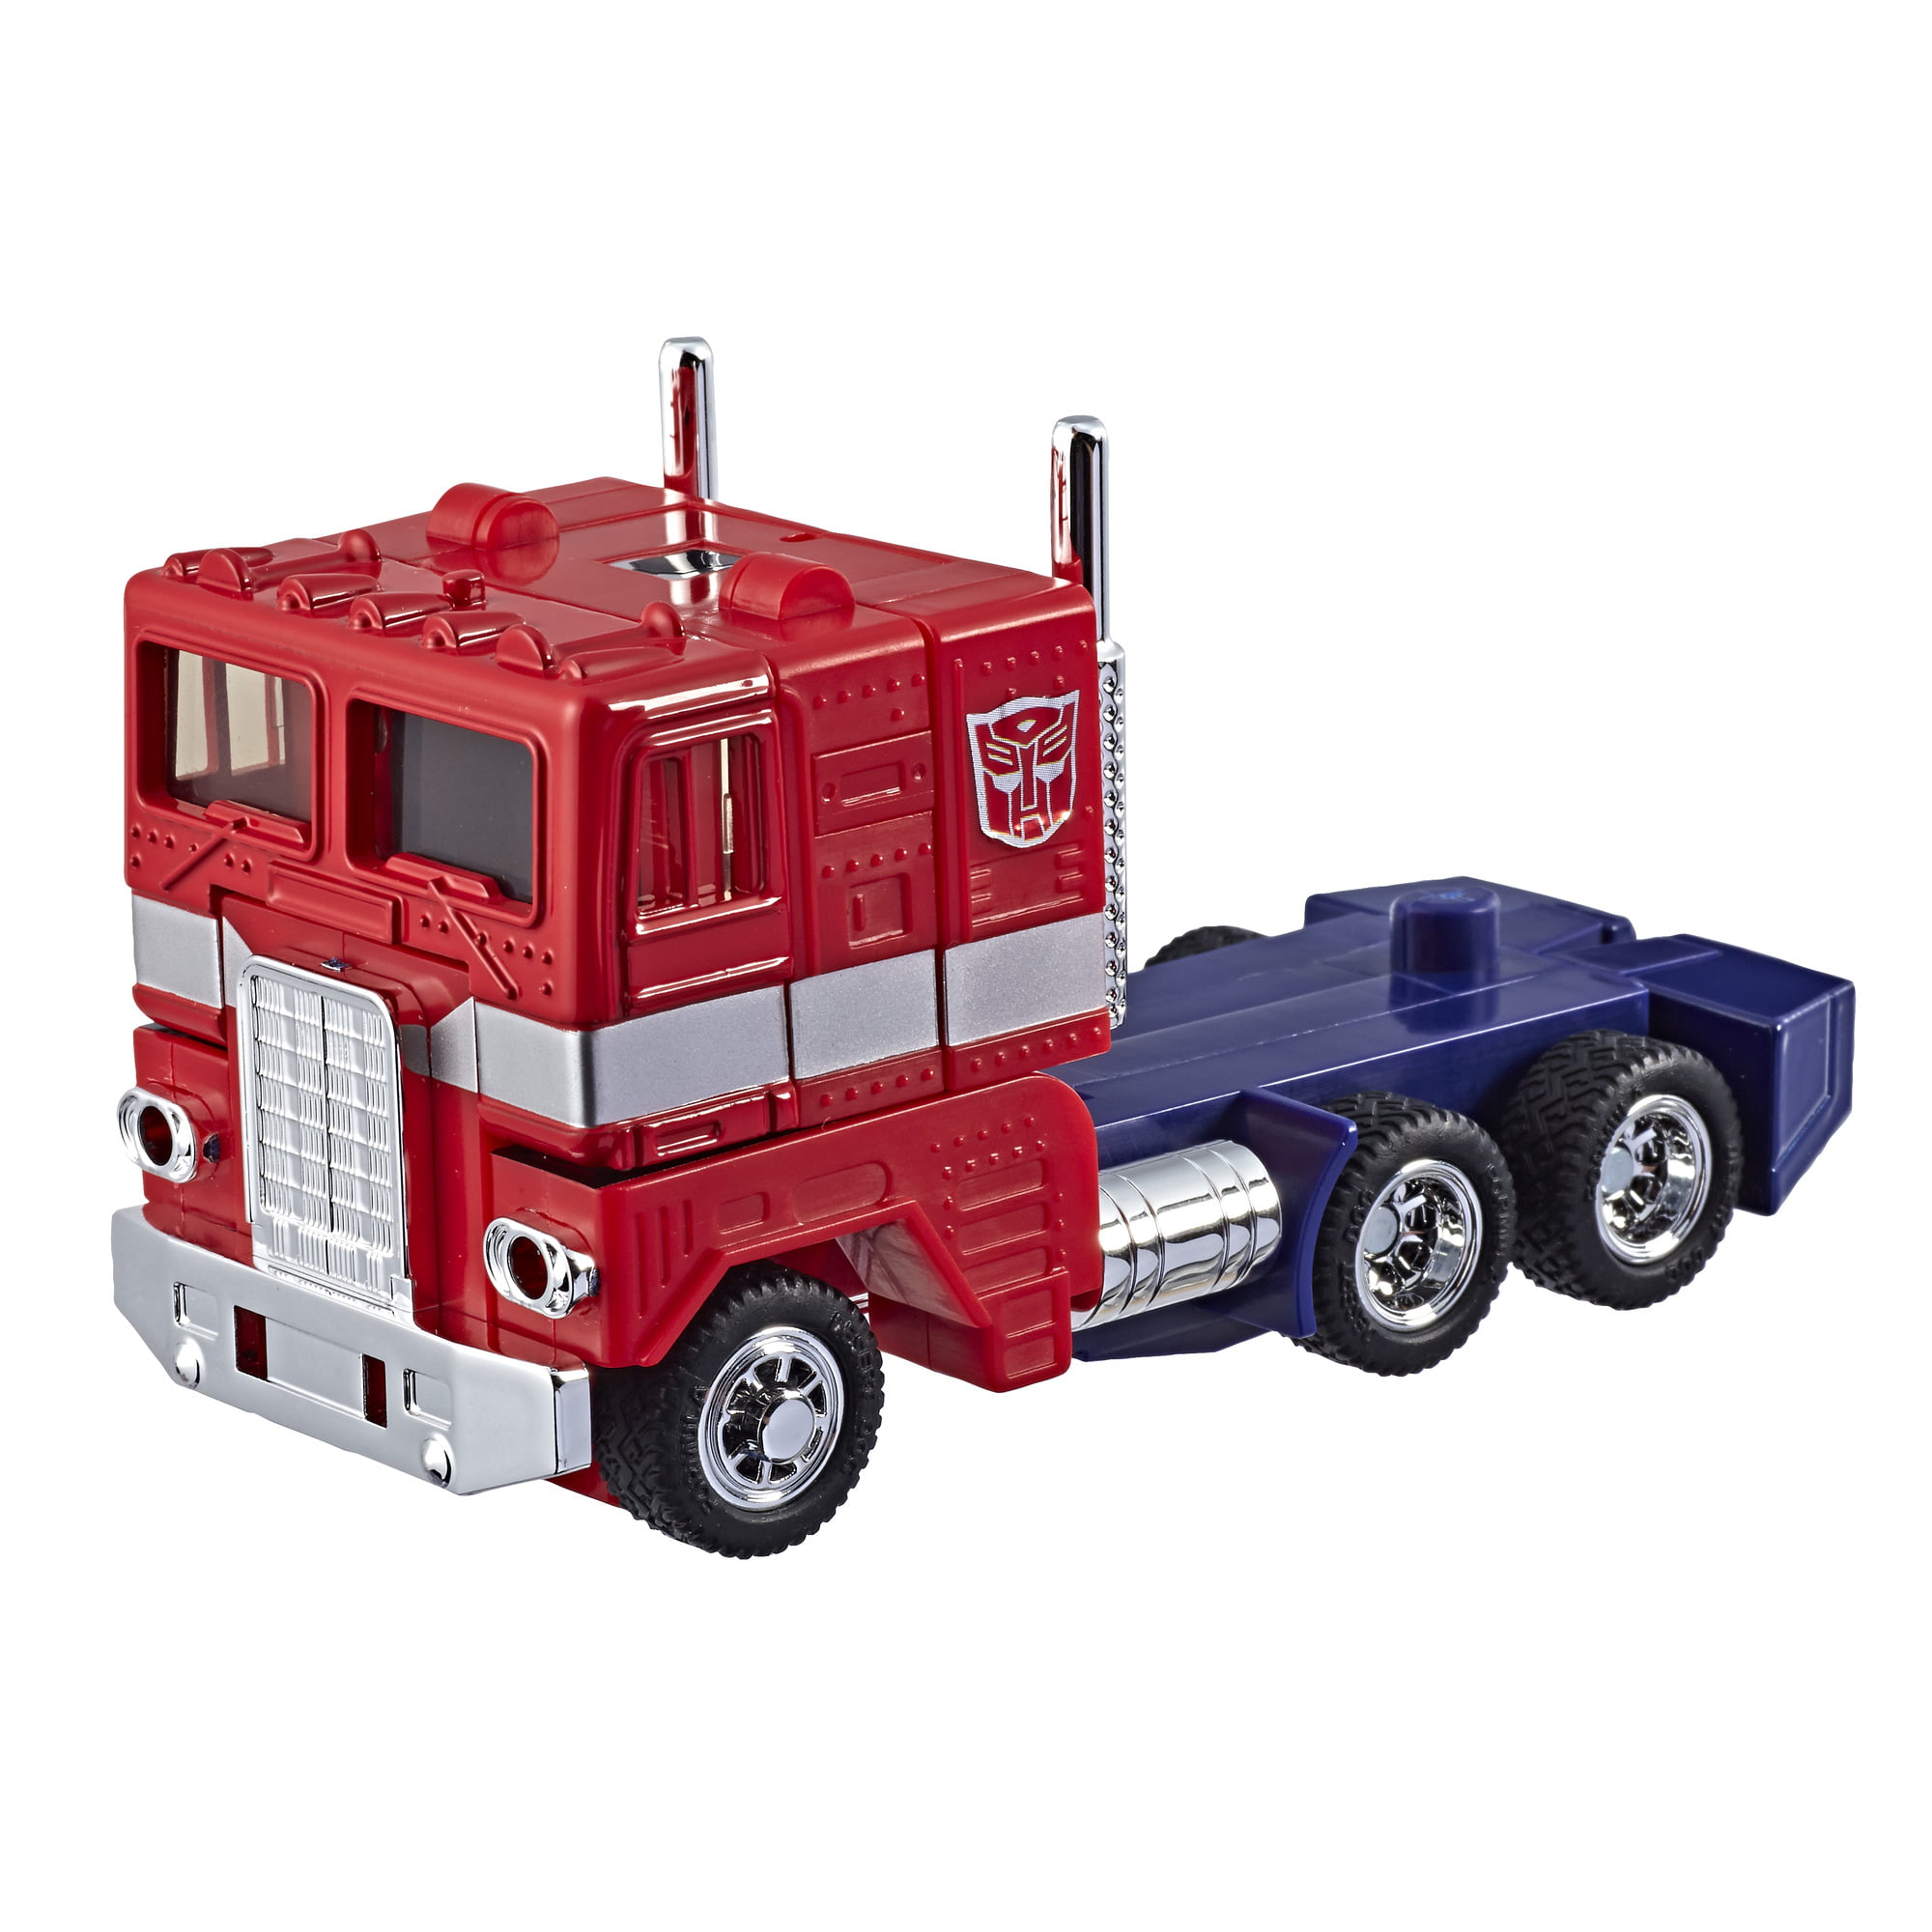 Transformers Optimus Prime G1 Metals Die Cast Truck Jada Toys 2019 for sale online